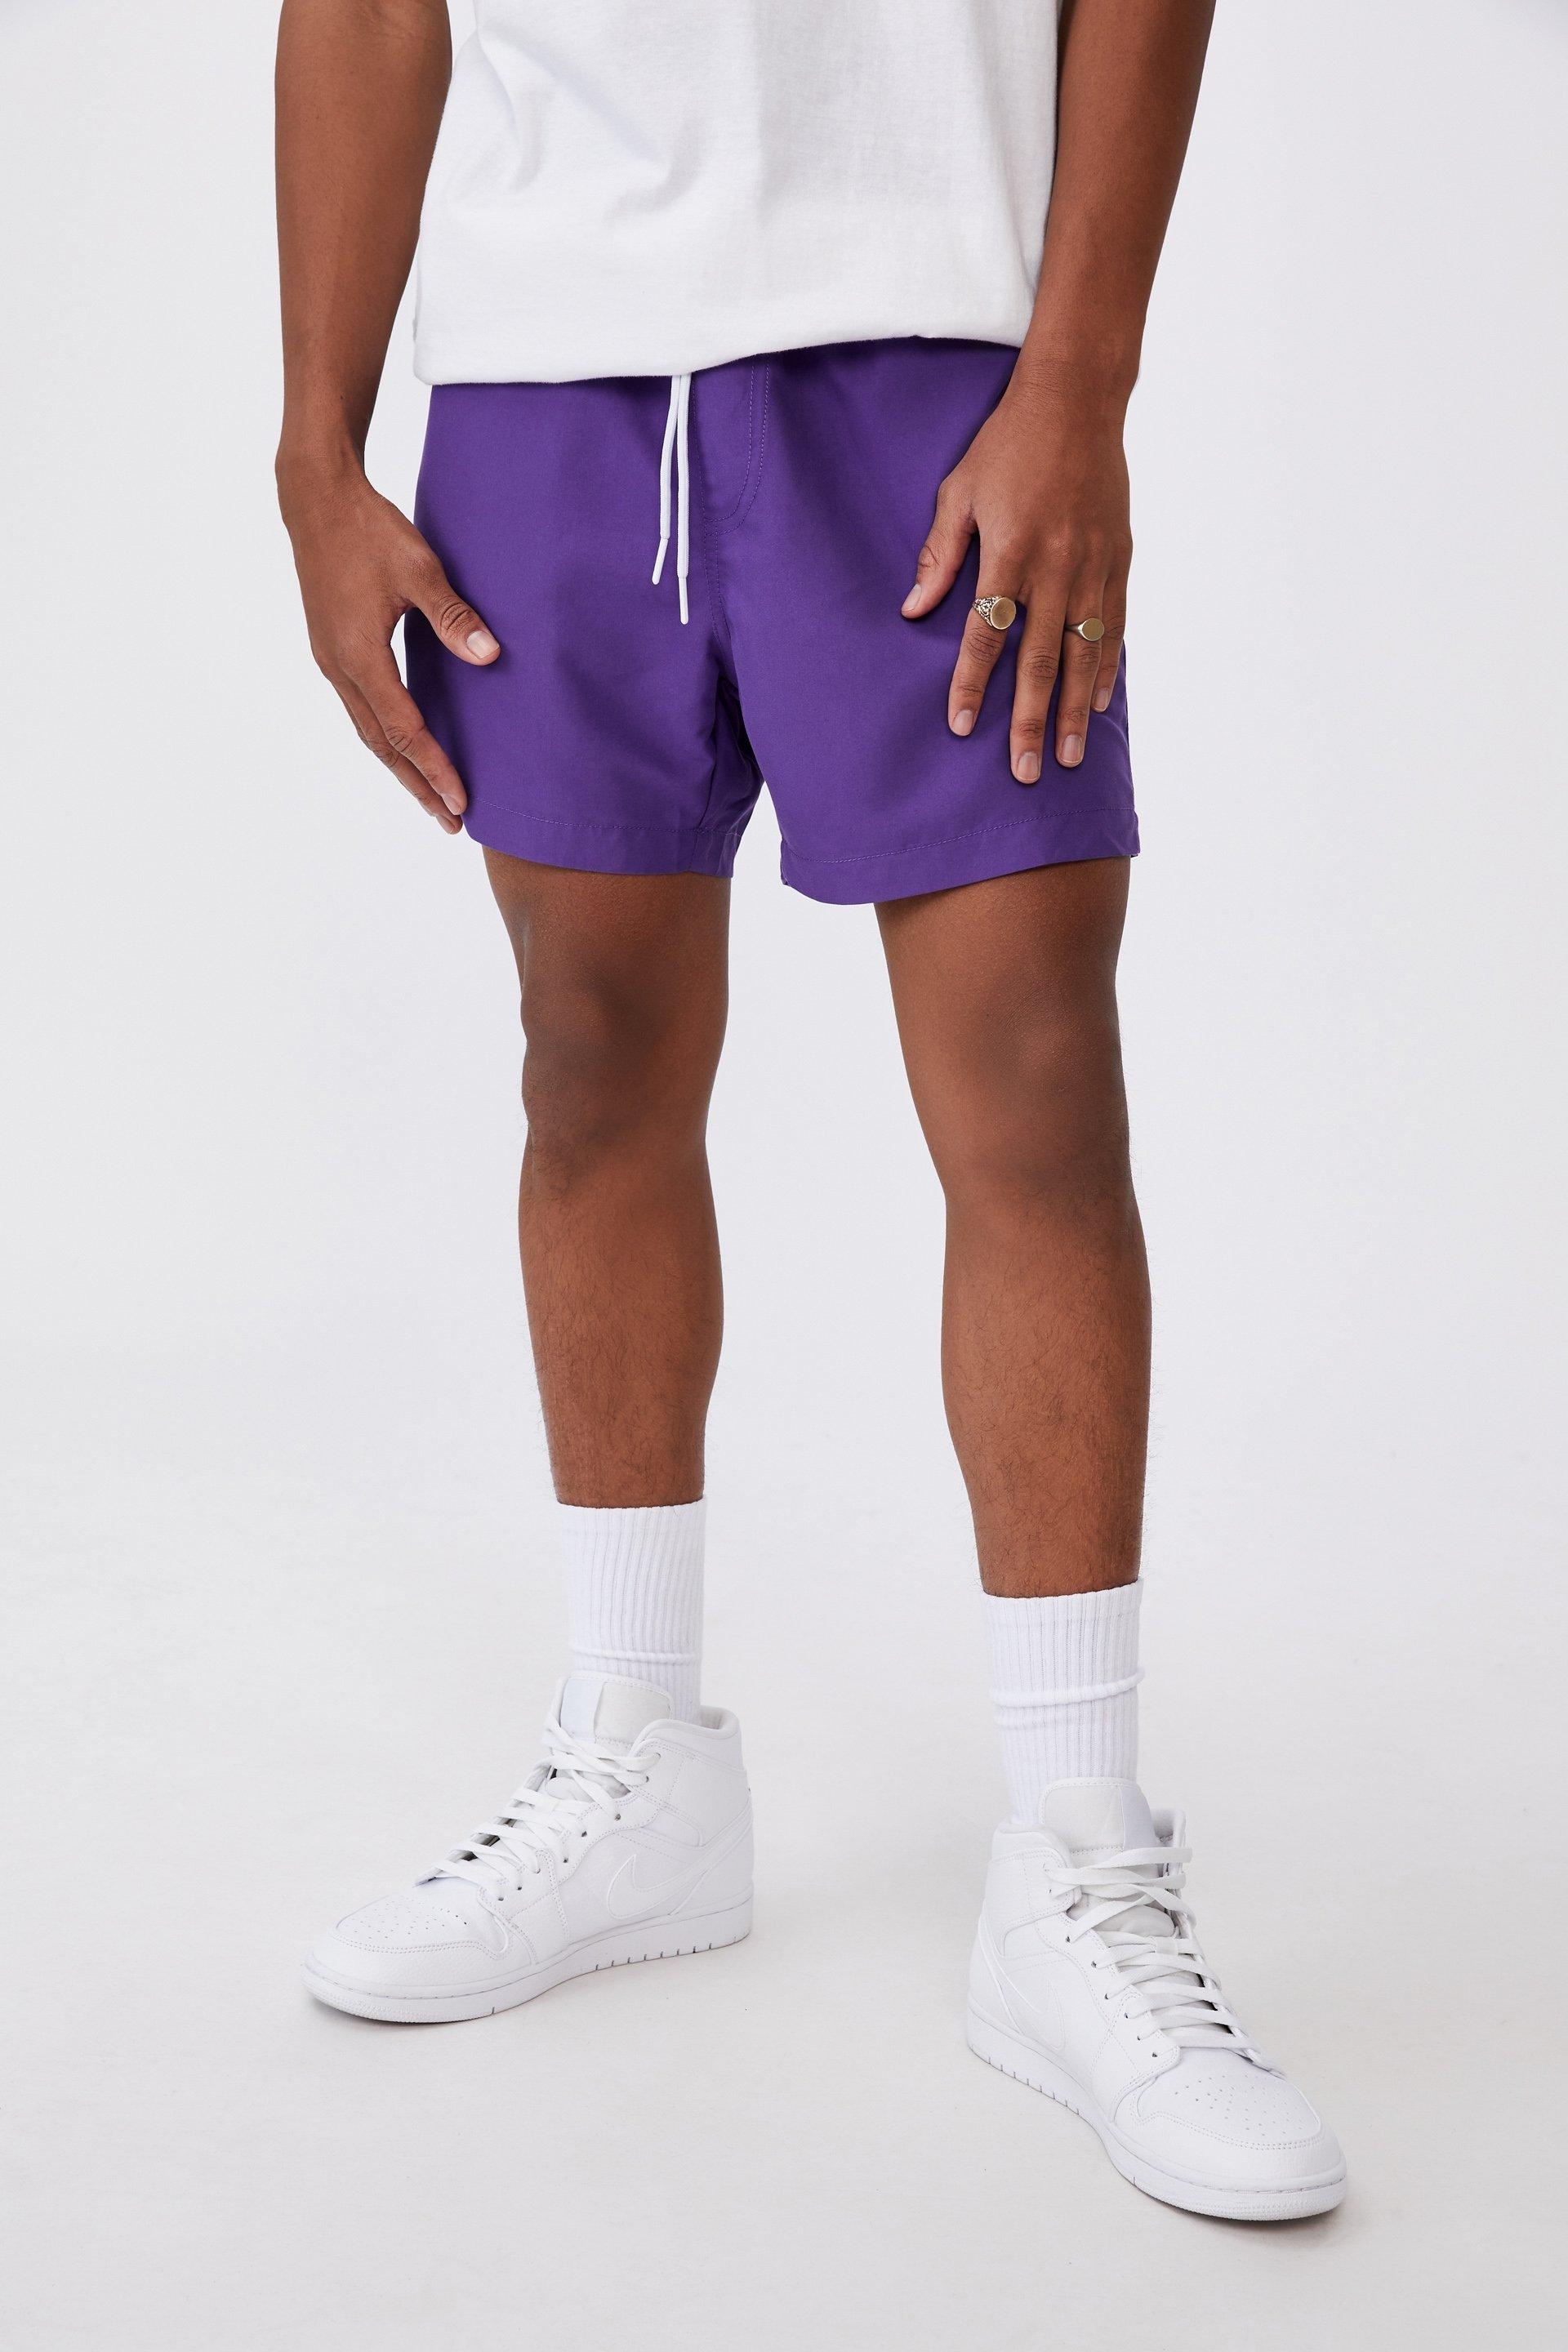 Resort short - purple Factorie Shorts | Superbalist.com